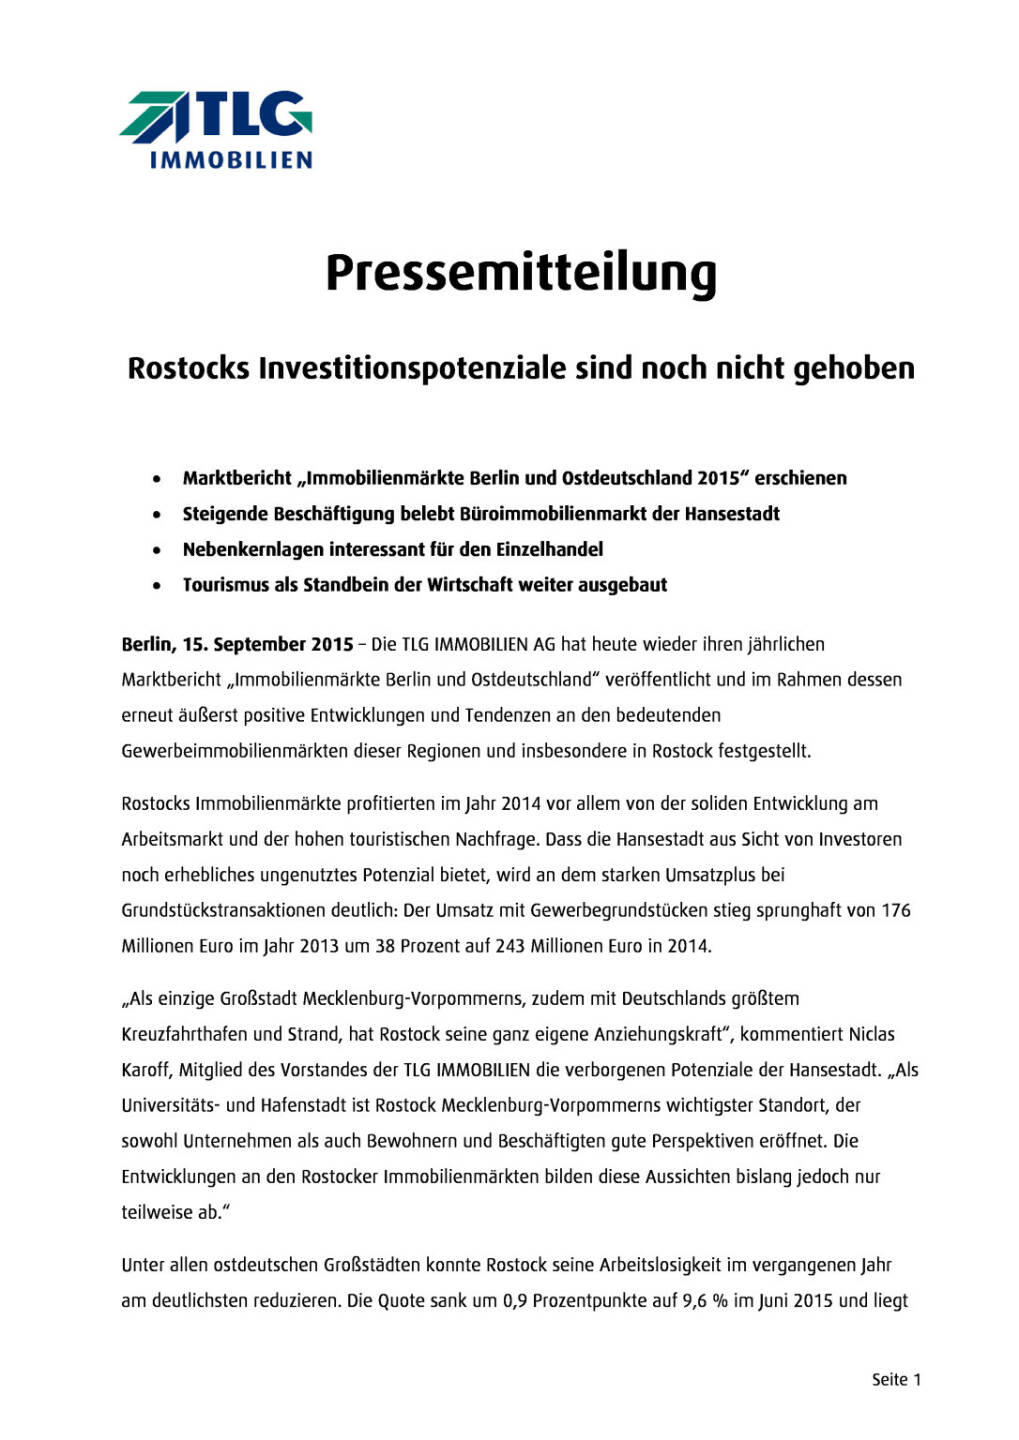 TLG Marktbericht Immobilienmärkte Berlin und Ostdeutschland, Seite 1/3, komplettes Dokument unter http://boerse-social.com/static/uploads/file_364_tlg_marktbericht_immobilienmarkte_berlin_und_ostdeutschland.pdf